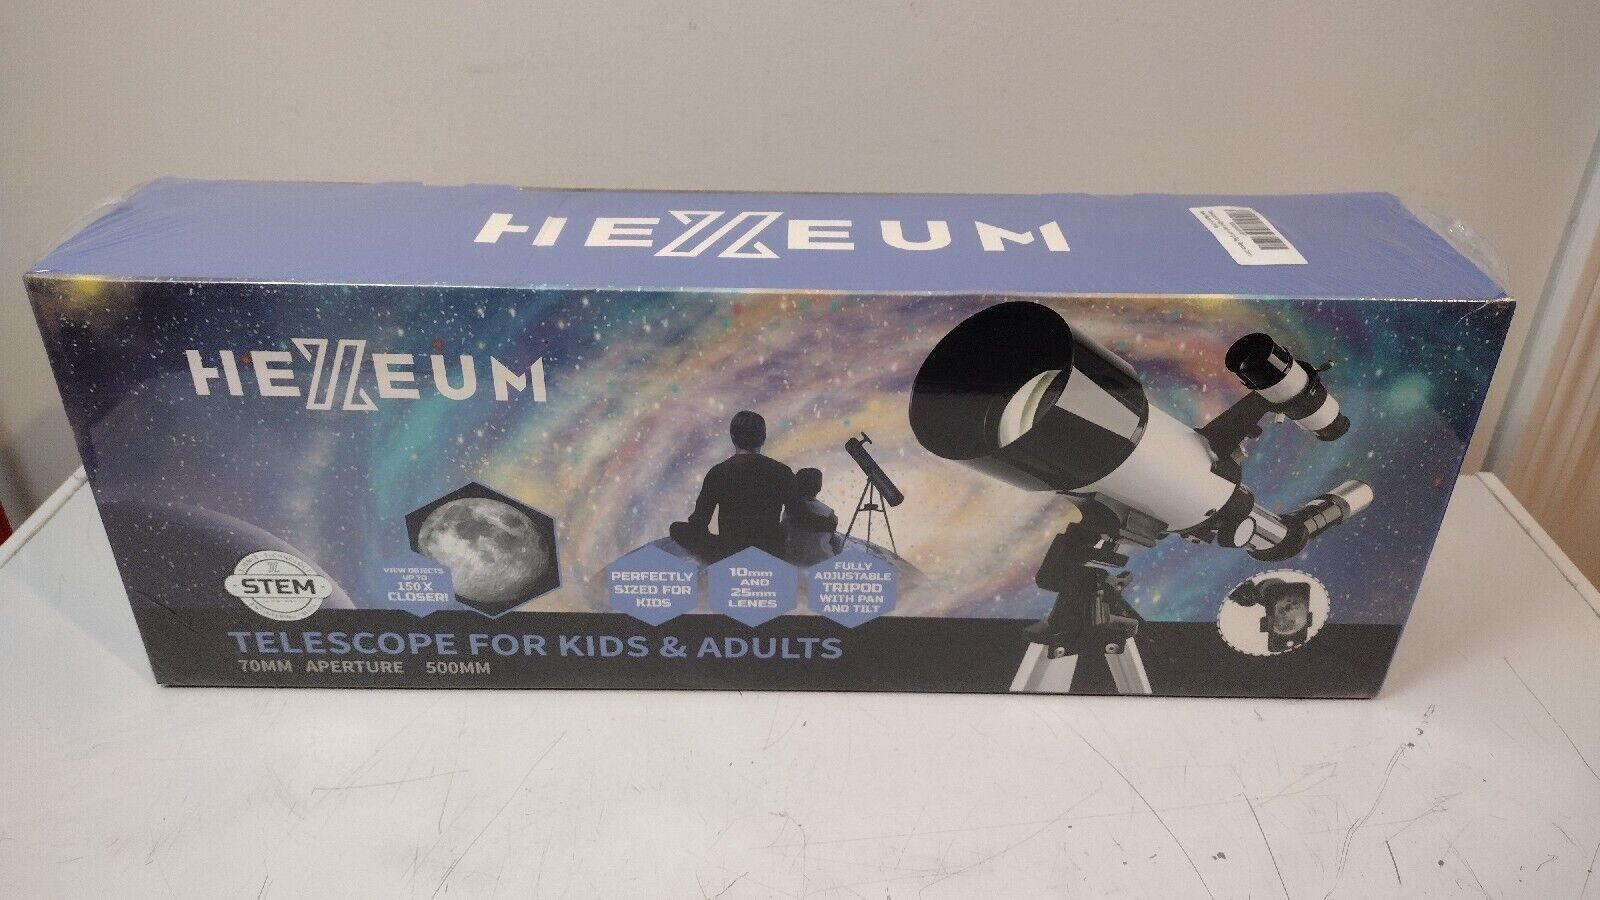 Telescope 70mm Aperture 500mm - for Kids & Adults Astronomical refracting AZ Bag